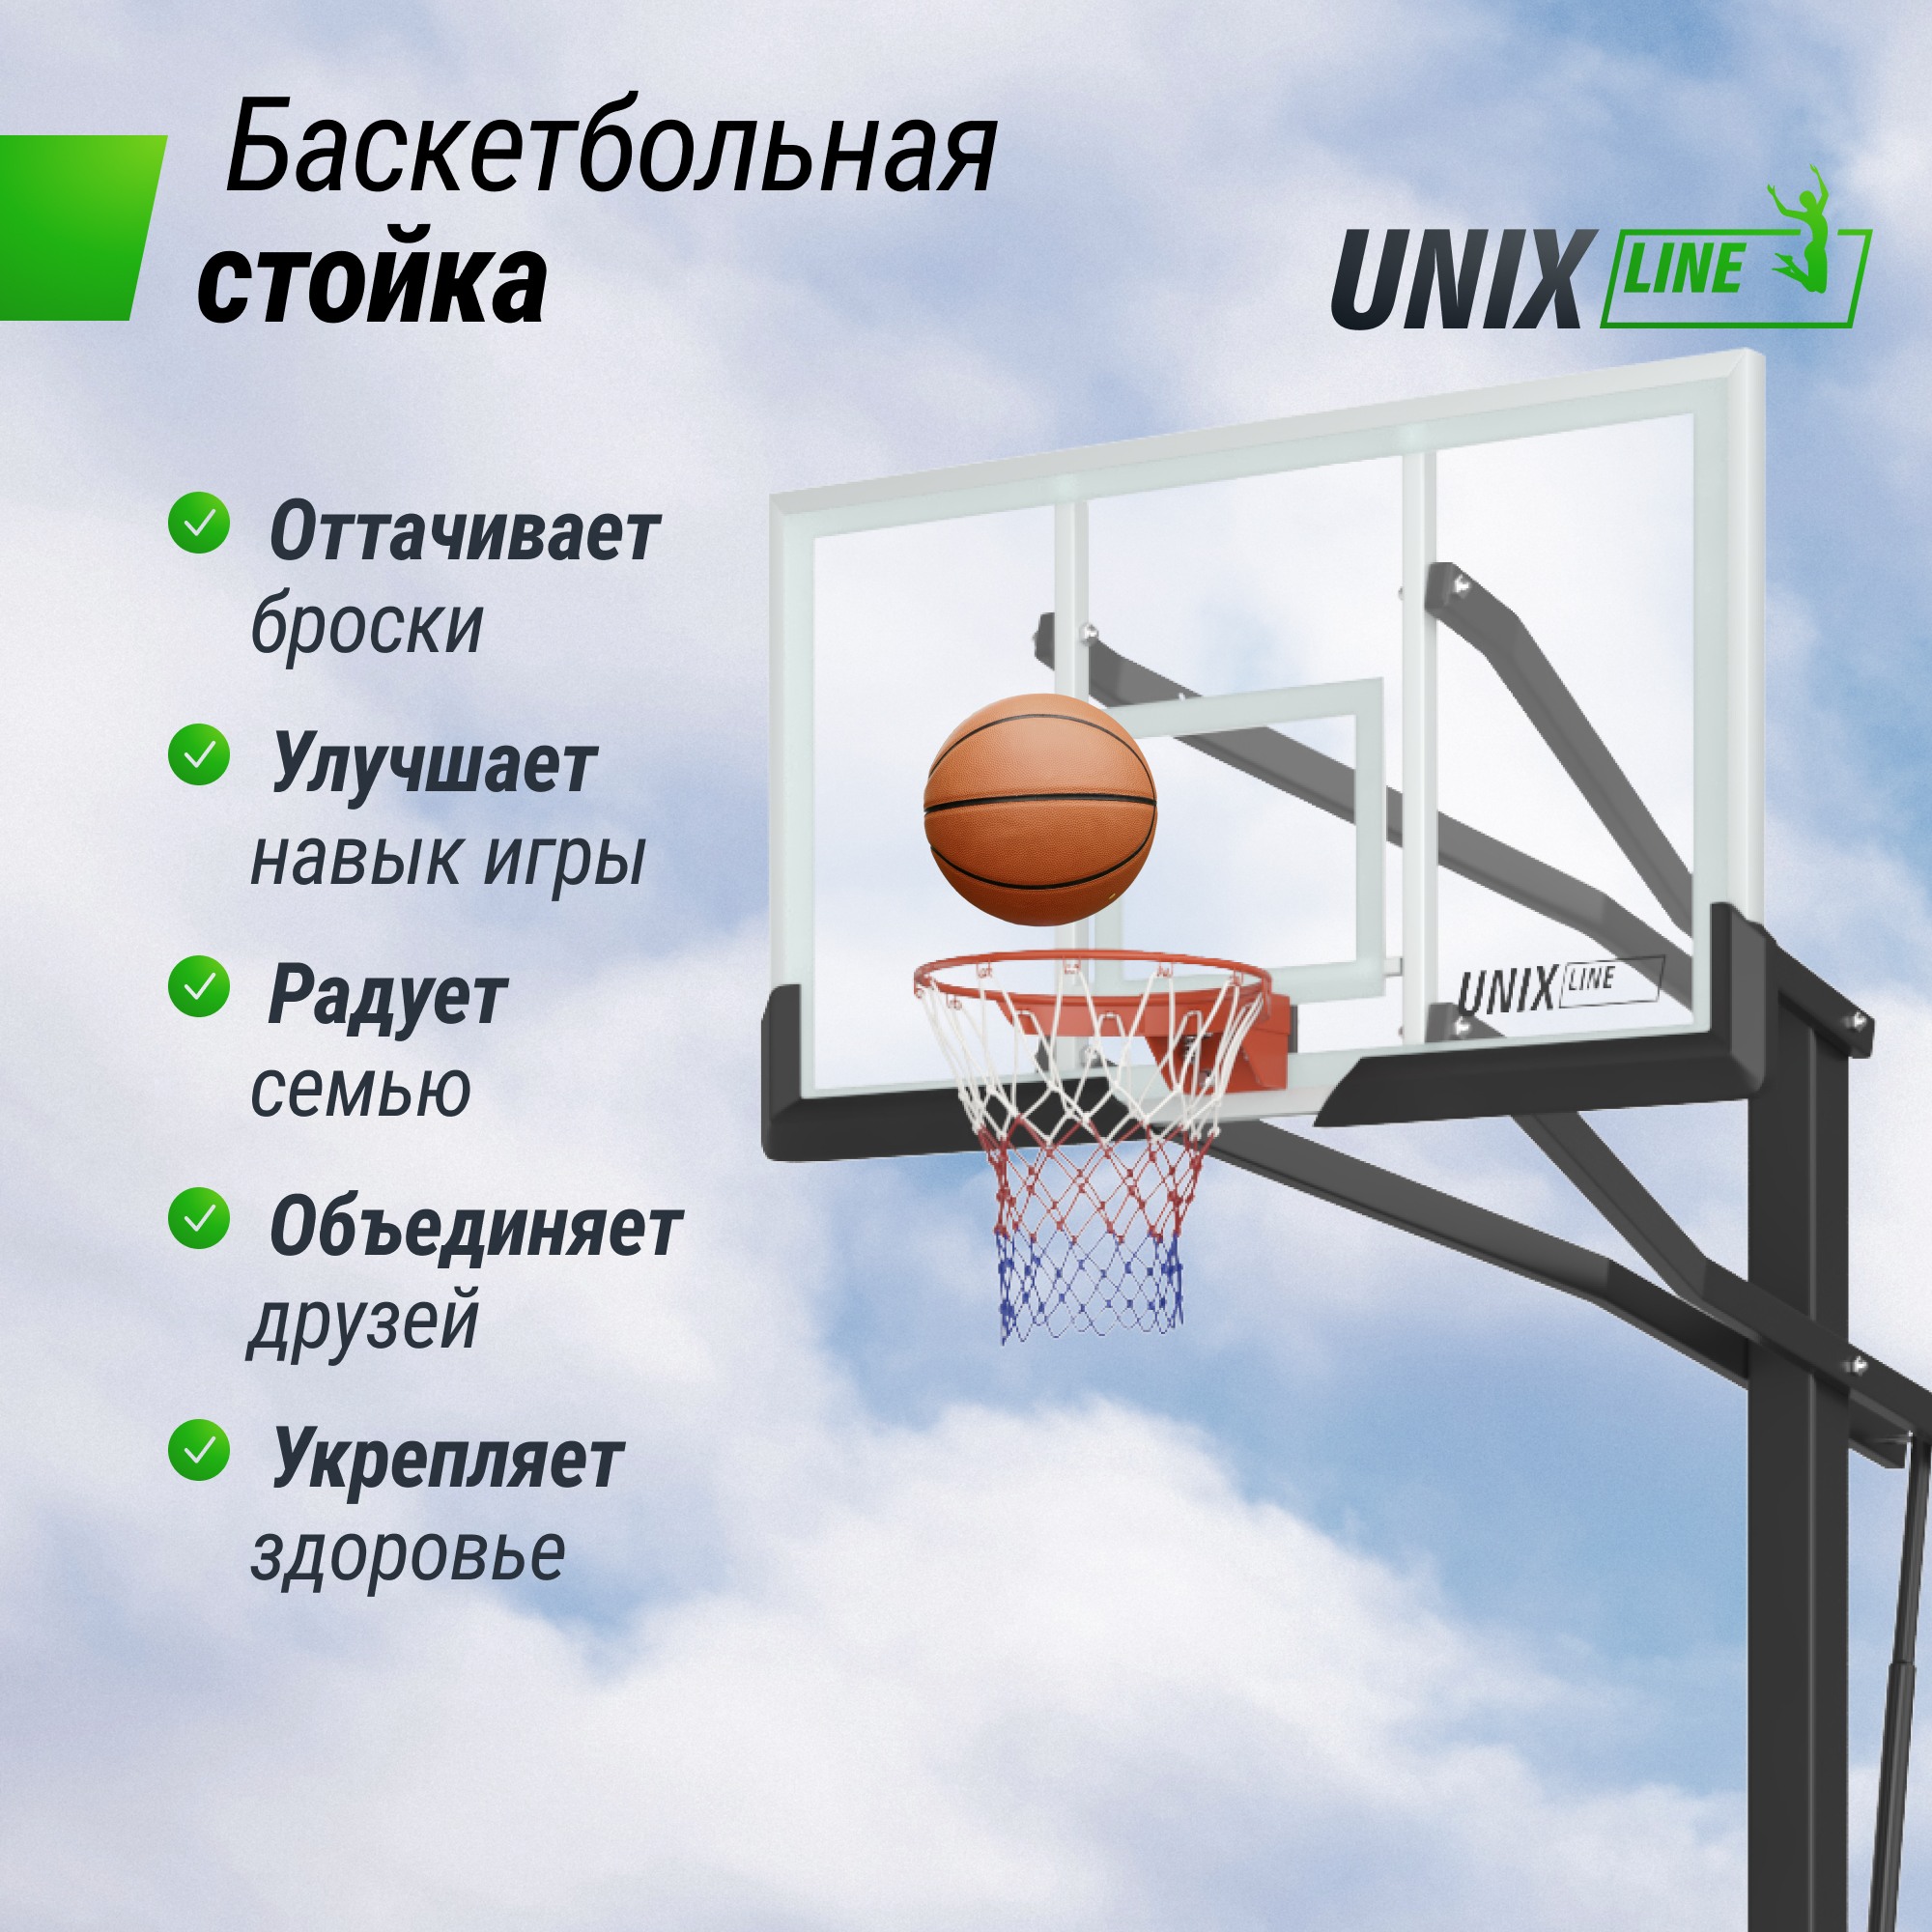 Баскетбольная стойка стационарная 72"x42" R45 H230-305см Unix Line B-Stand-PC BSTSSTPR305_72PCBK 2000_2000